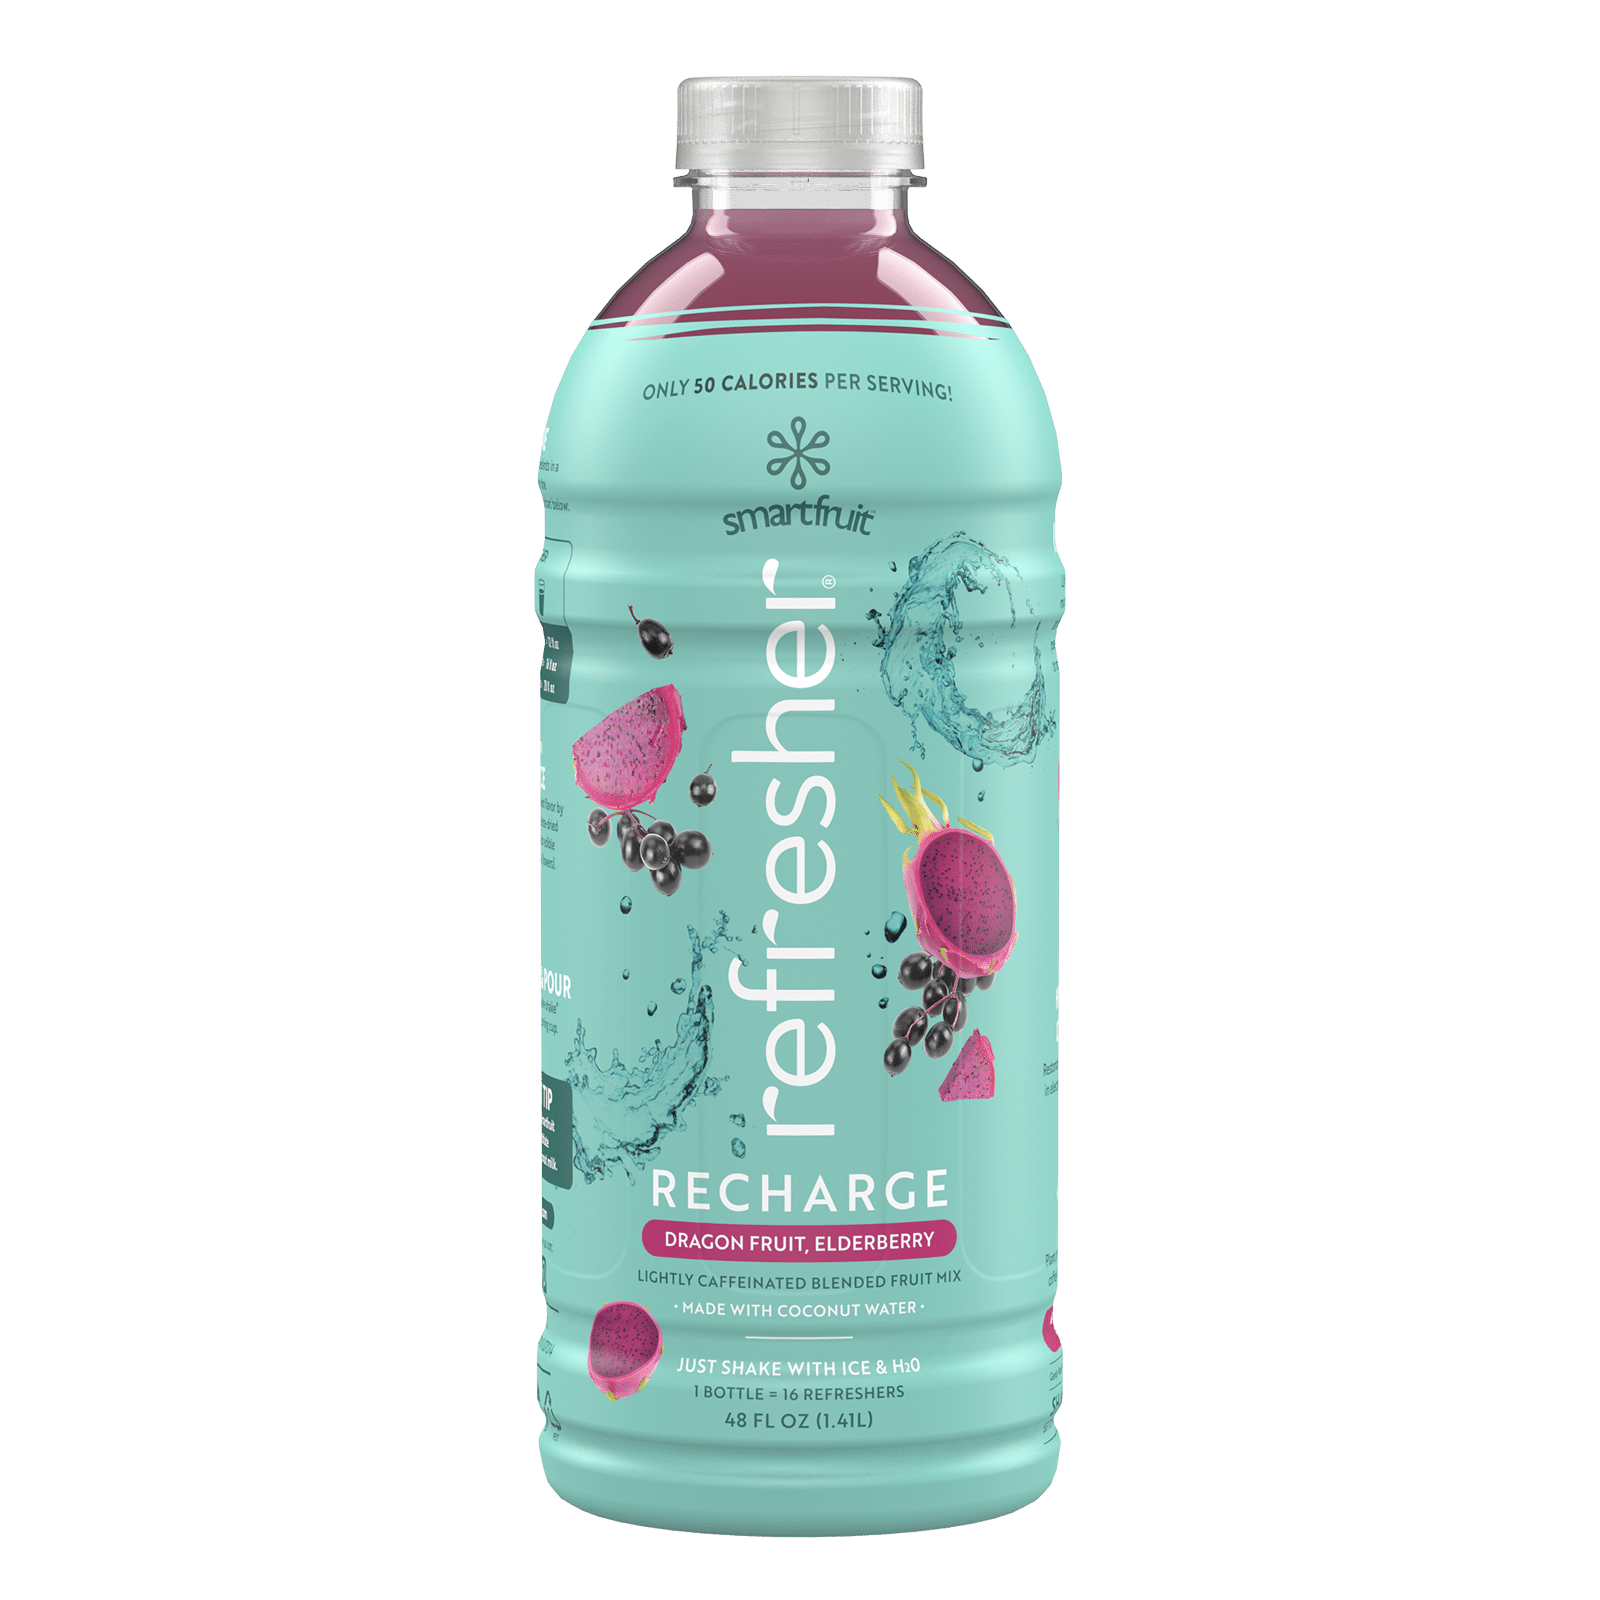 Smartfruit Recharge Refresher bottle